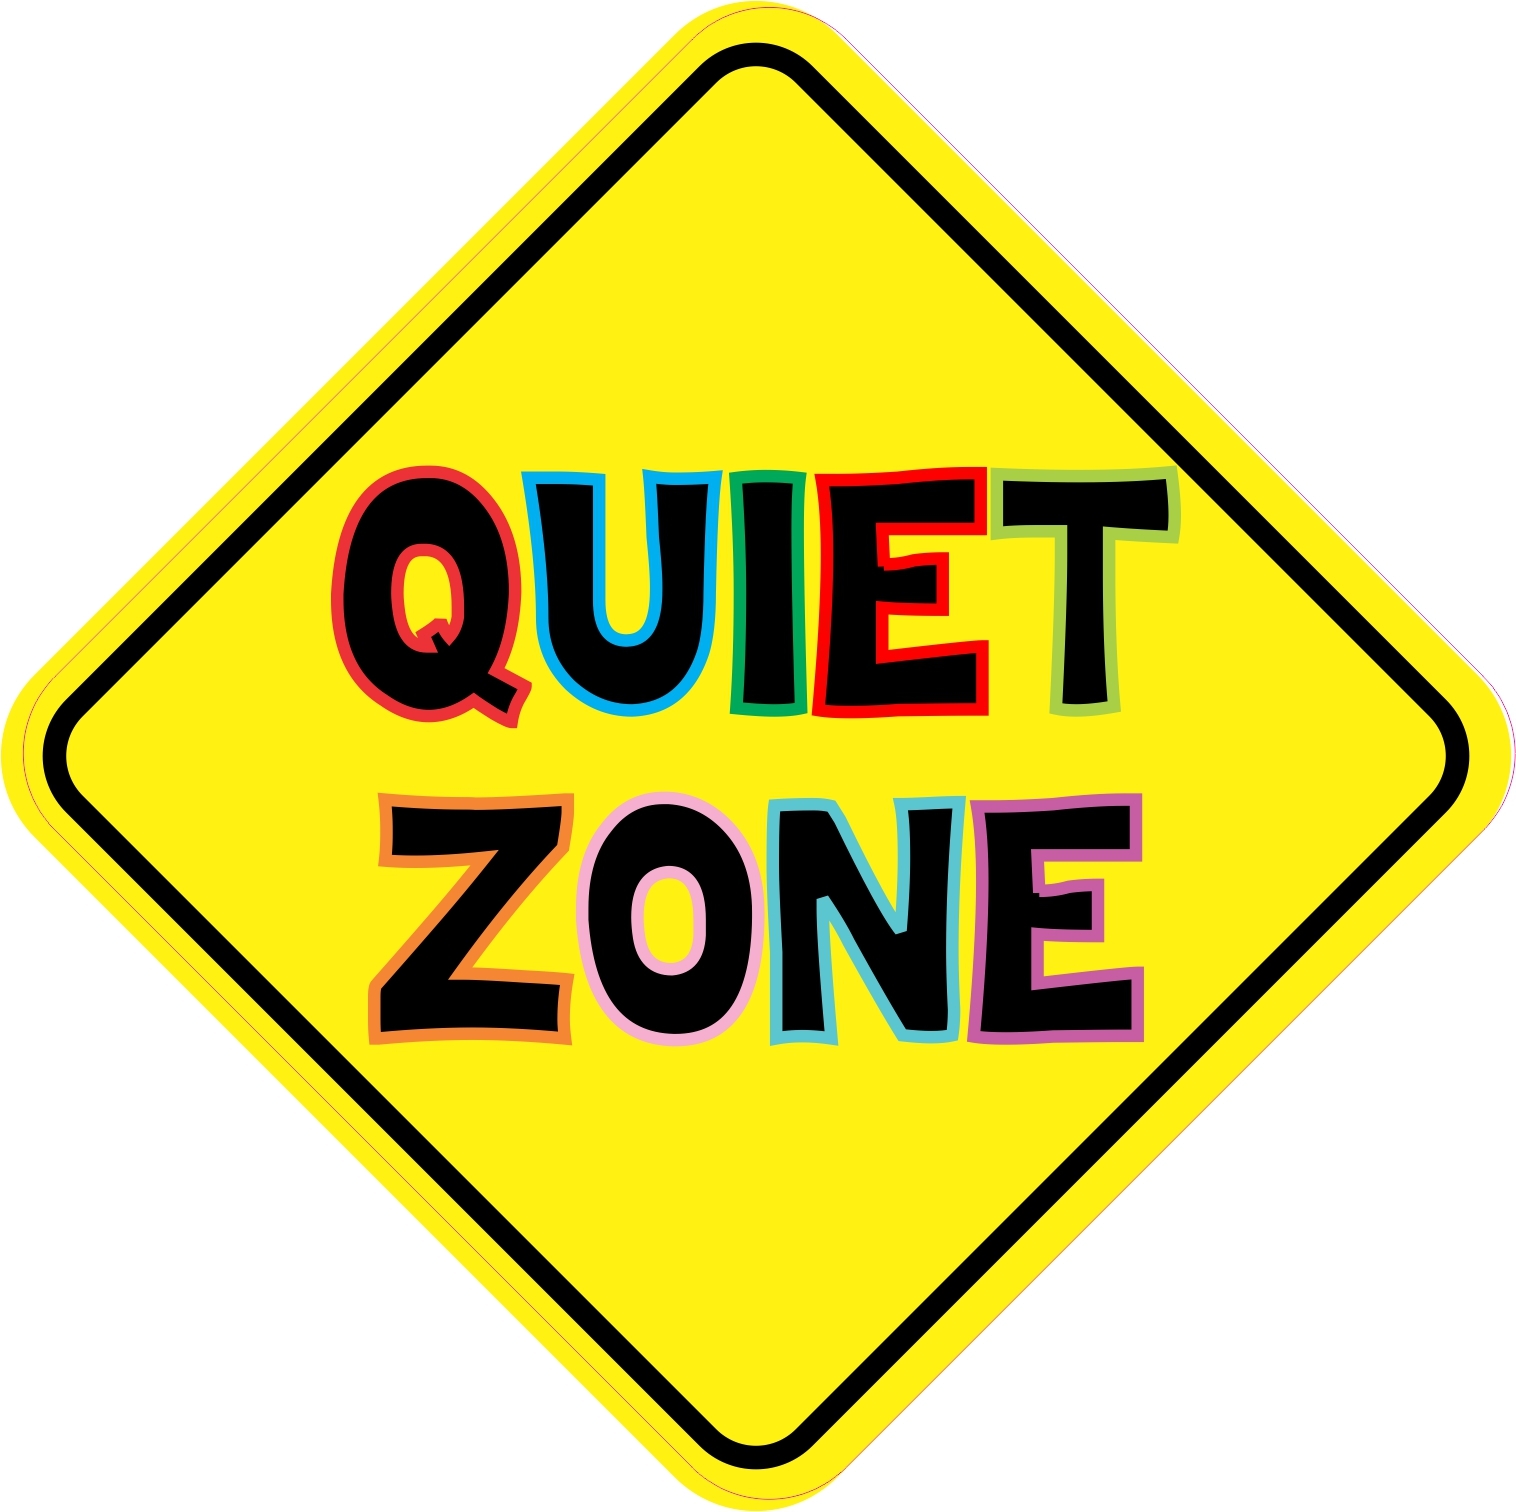 Quiet Signs - Clipart library - Shhh Clip Art